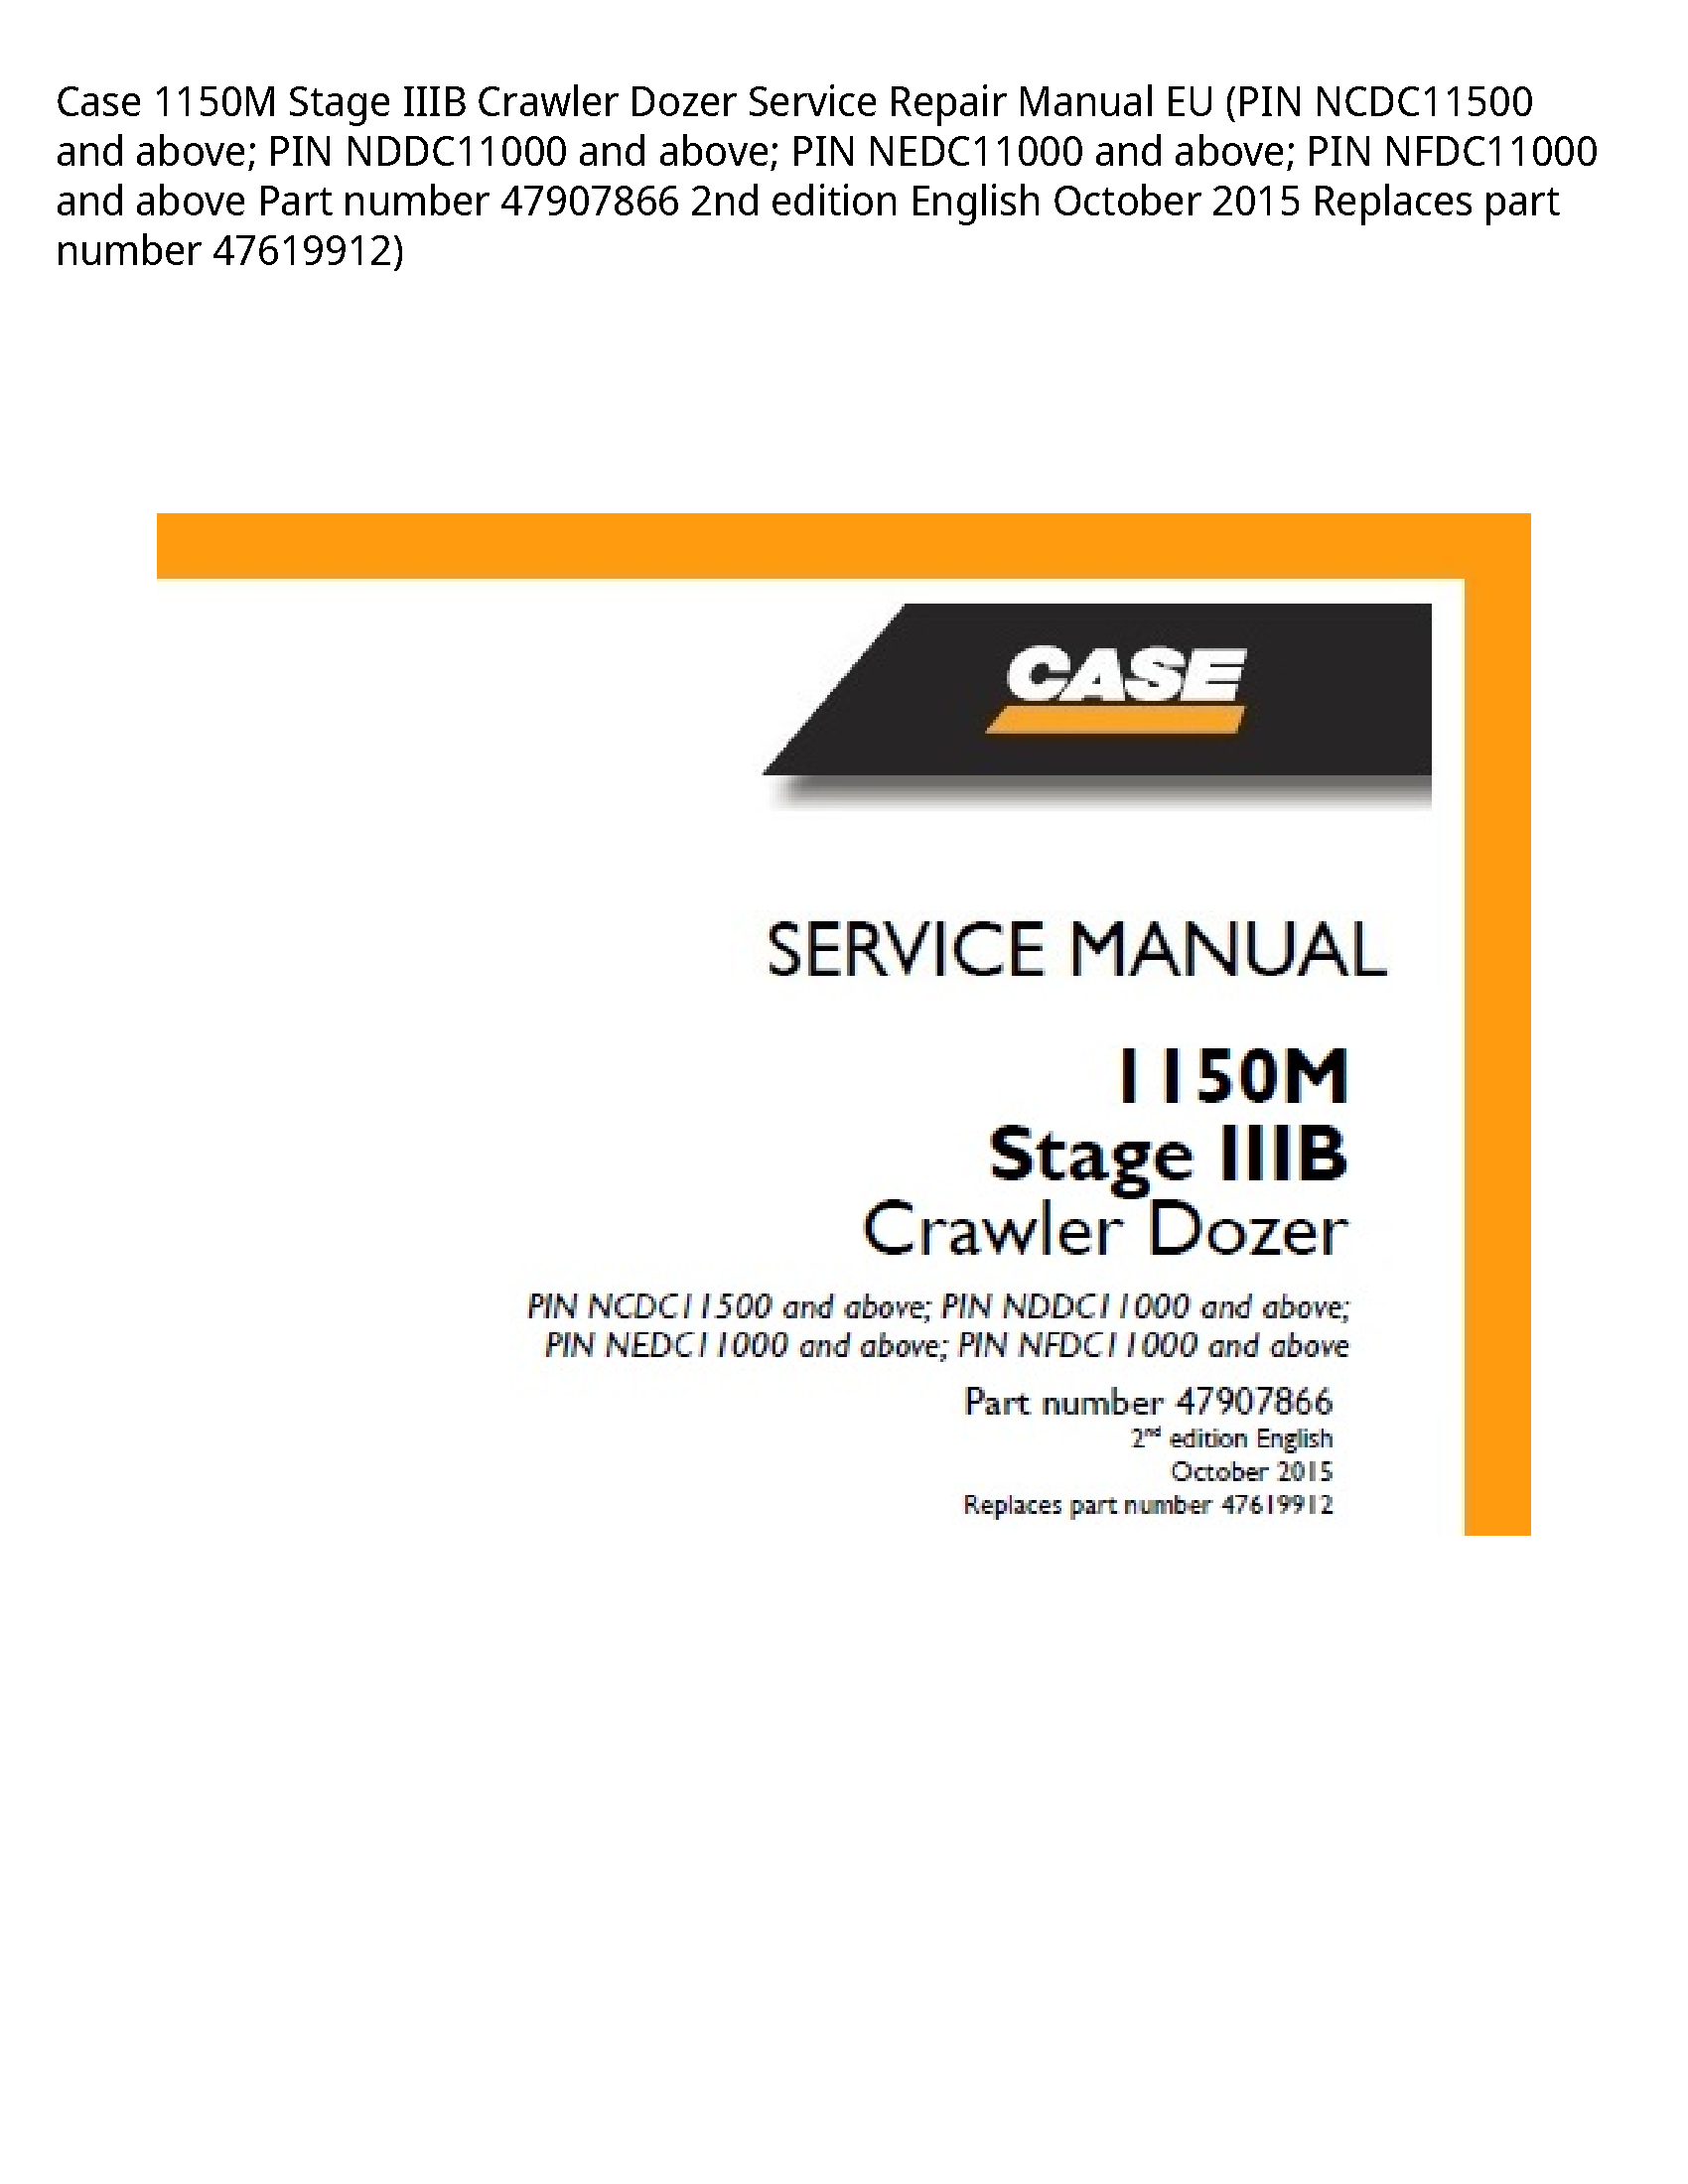 Case/Case IH 1150M Stage IIIB Crawler Dozer manual